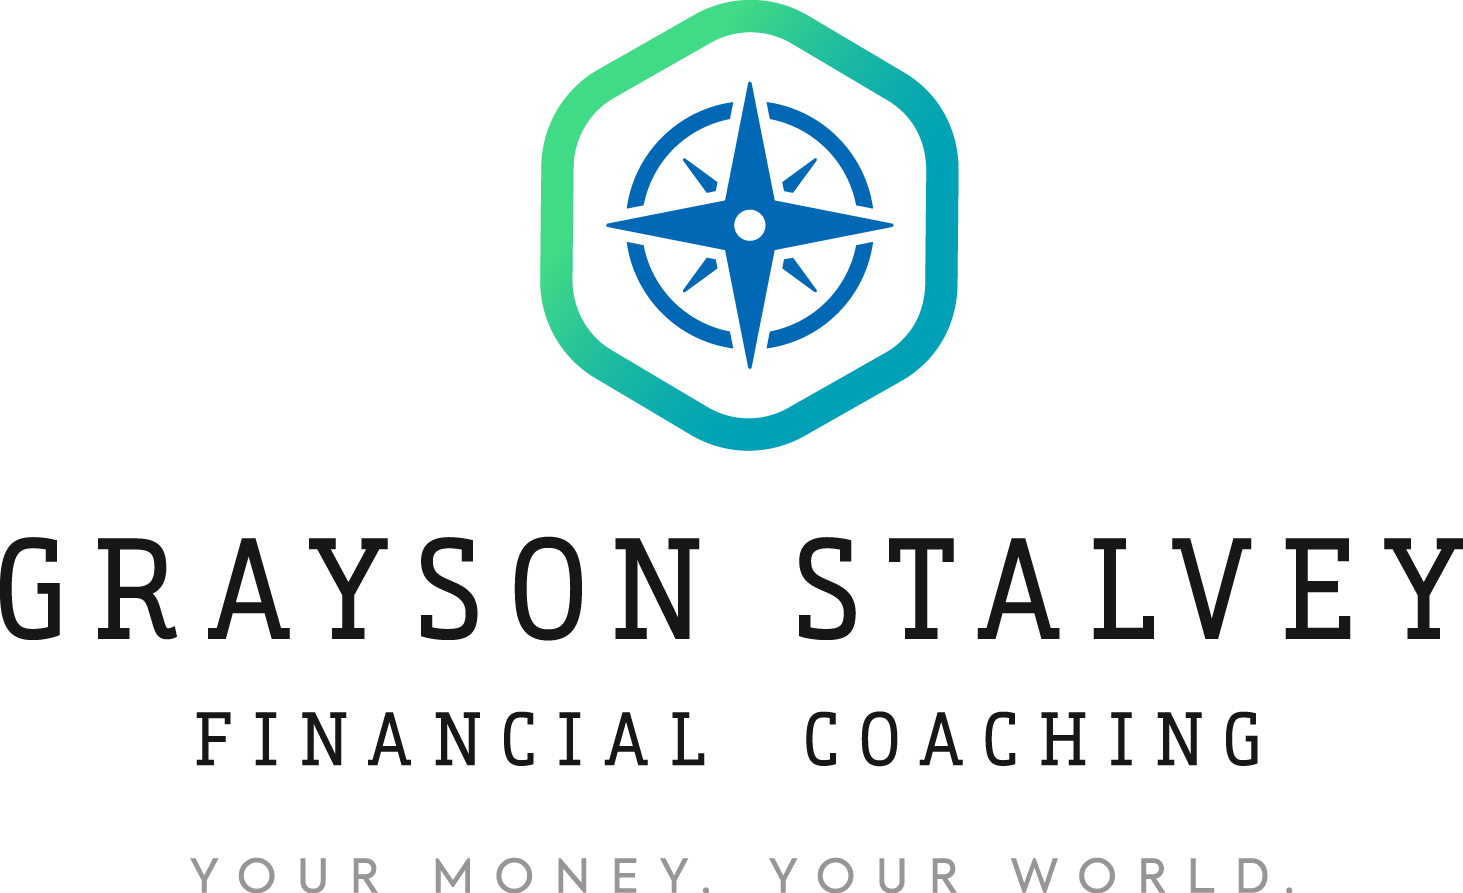 Grayson Stalvey financial coaching logo